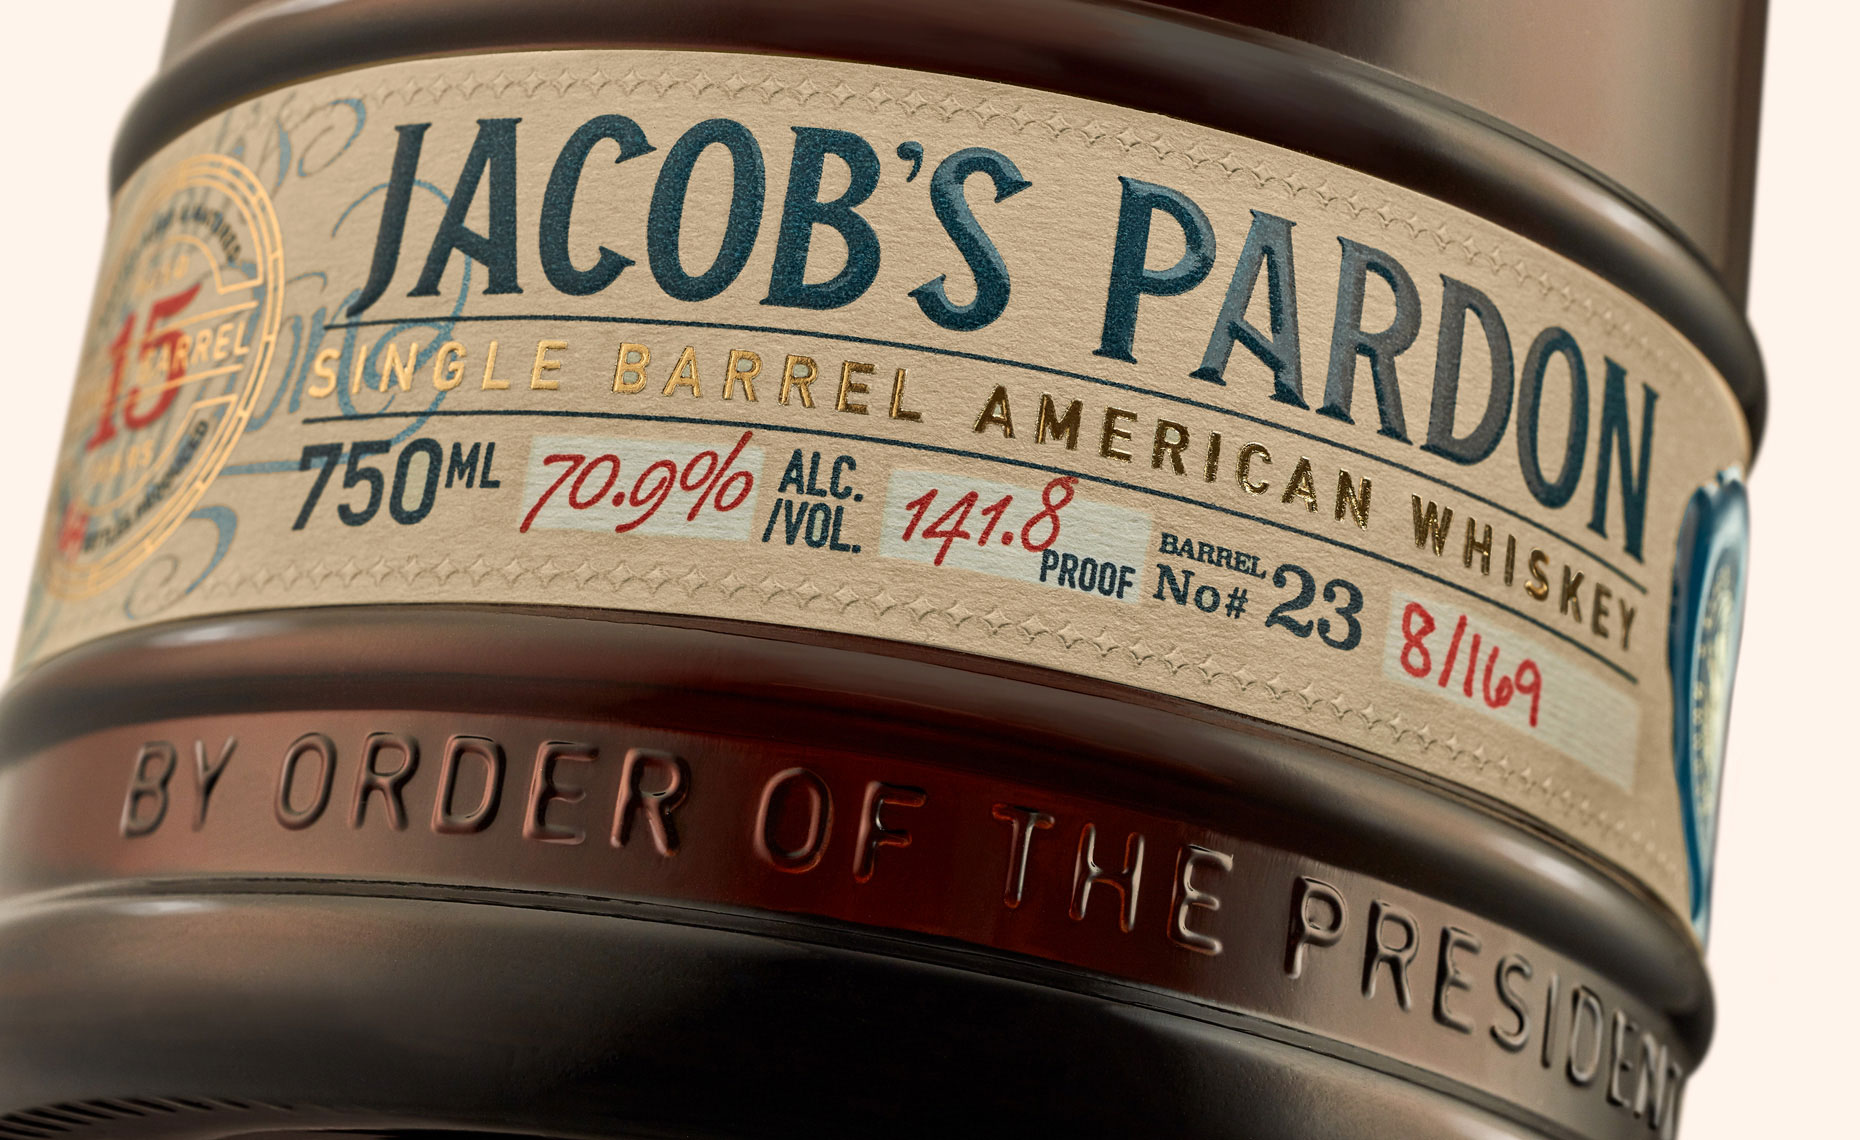 Jacobs Pardon Whiskey Bottle Detail Macro Photography